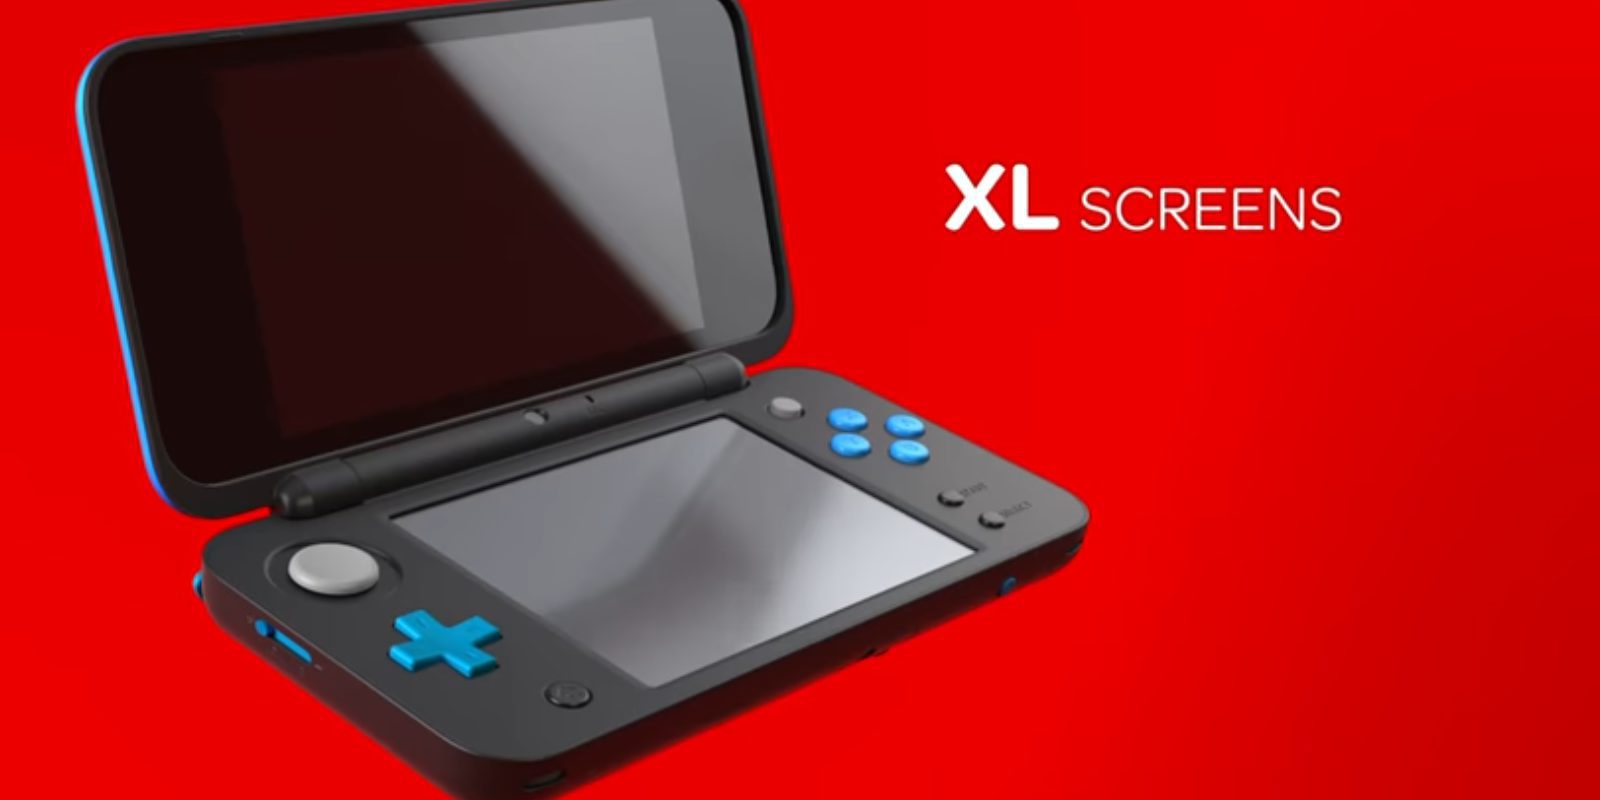 Nintendo anuncia New Nintendo 2DS XL